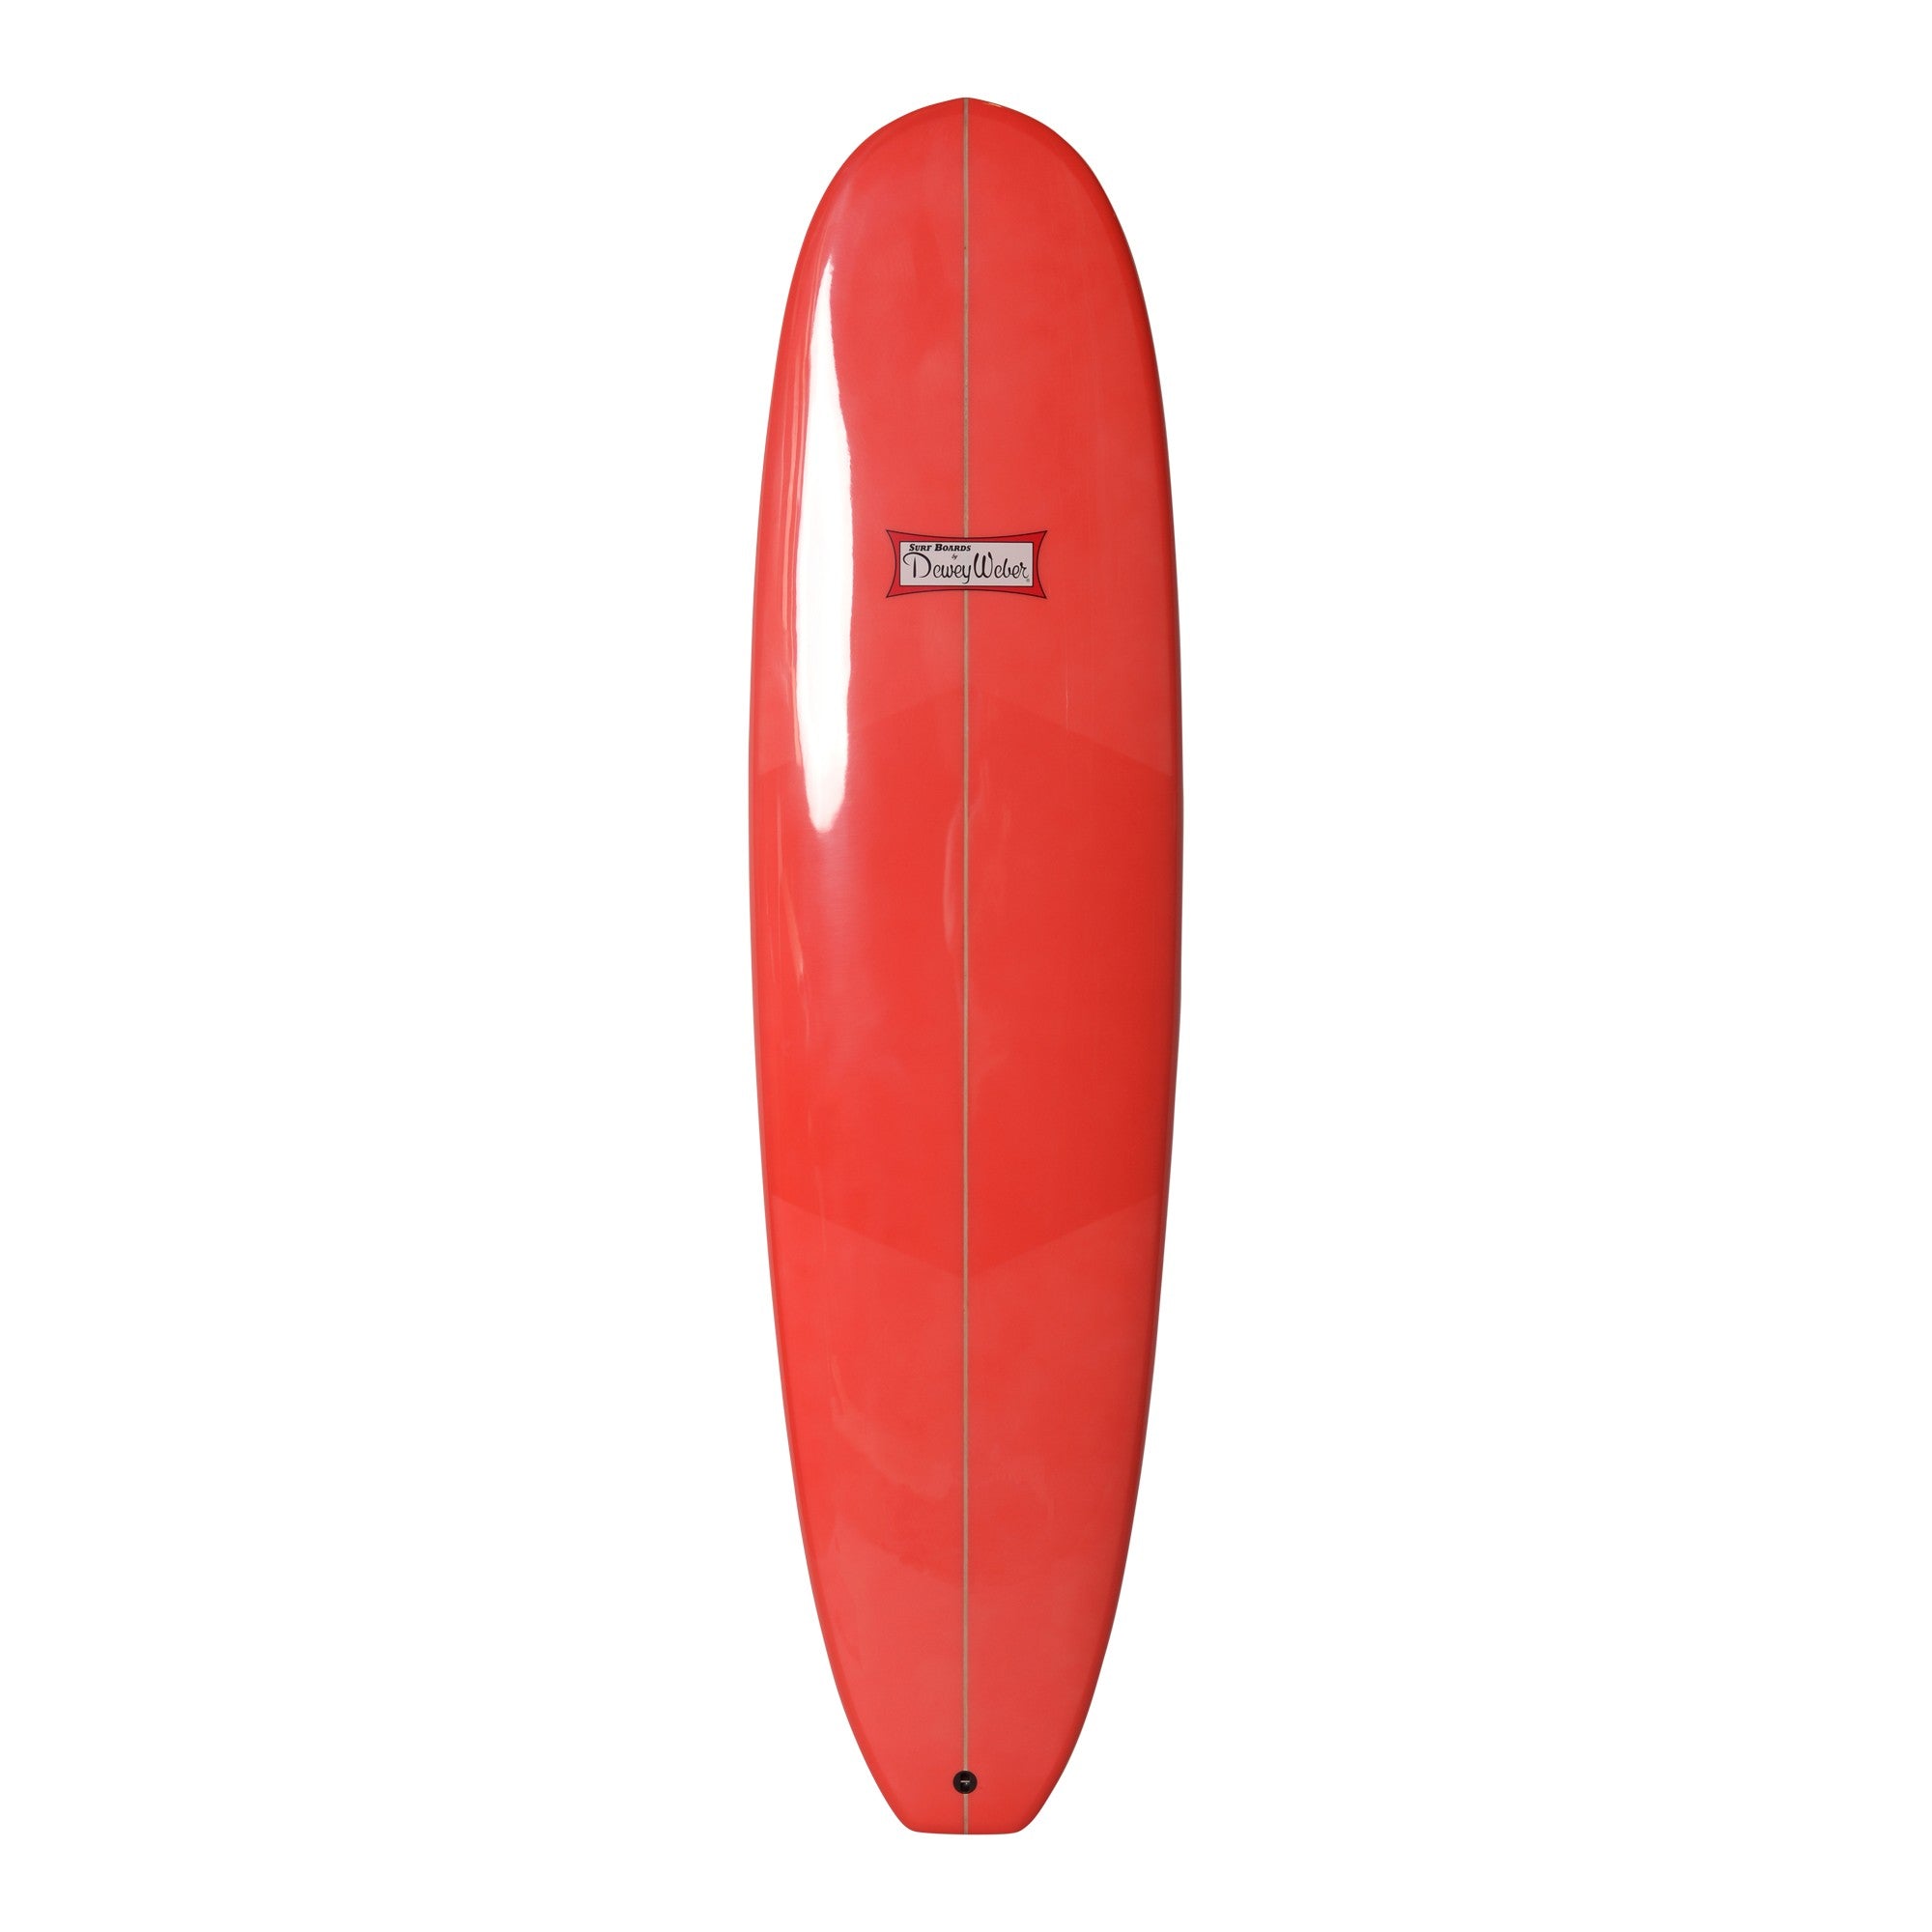 WEBER SURFBOARDS - Quantum 9'2 - Red